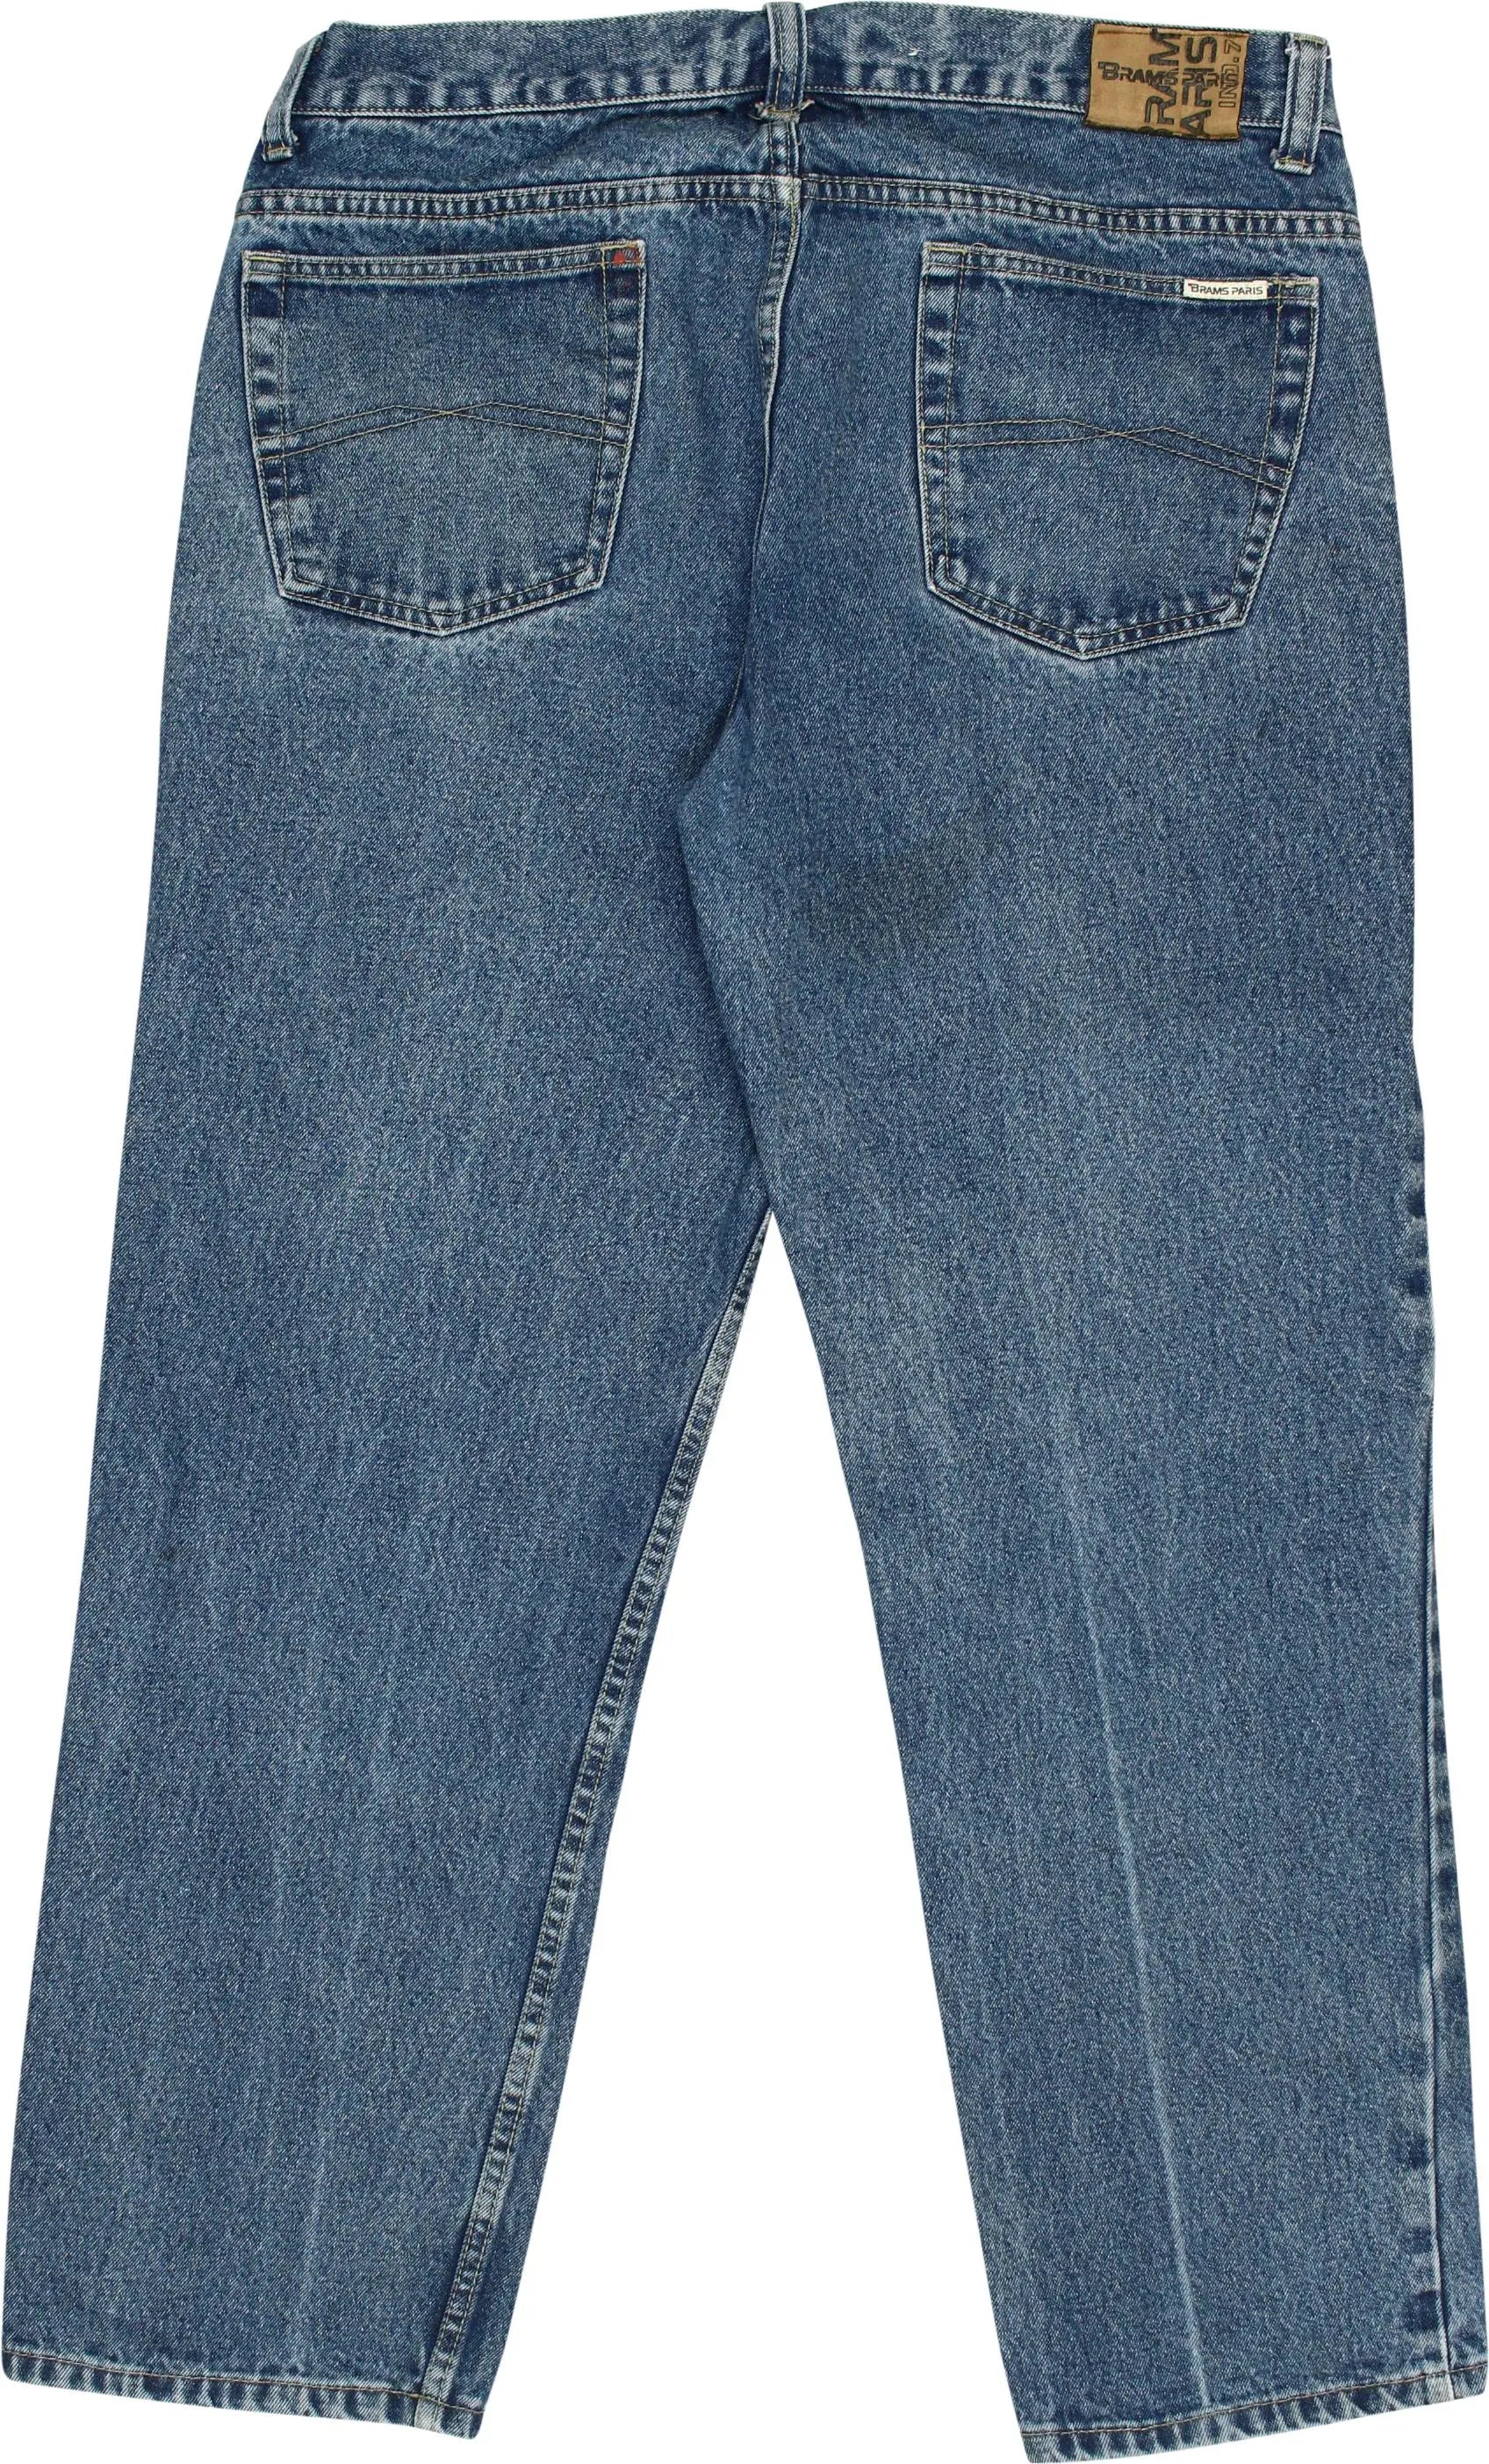 Bram's Paris - Regular Fit Jeans- ThriftTale.com - Vintage and second handclothing